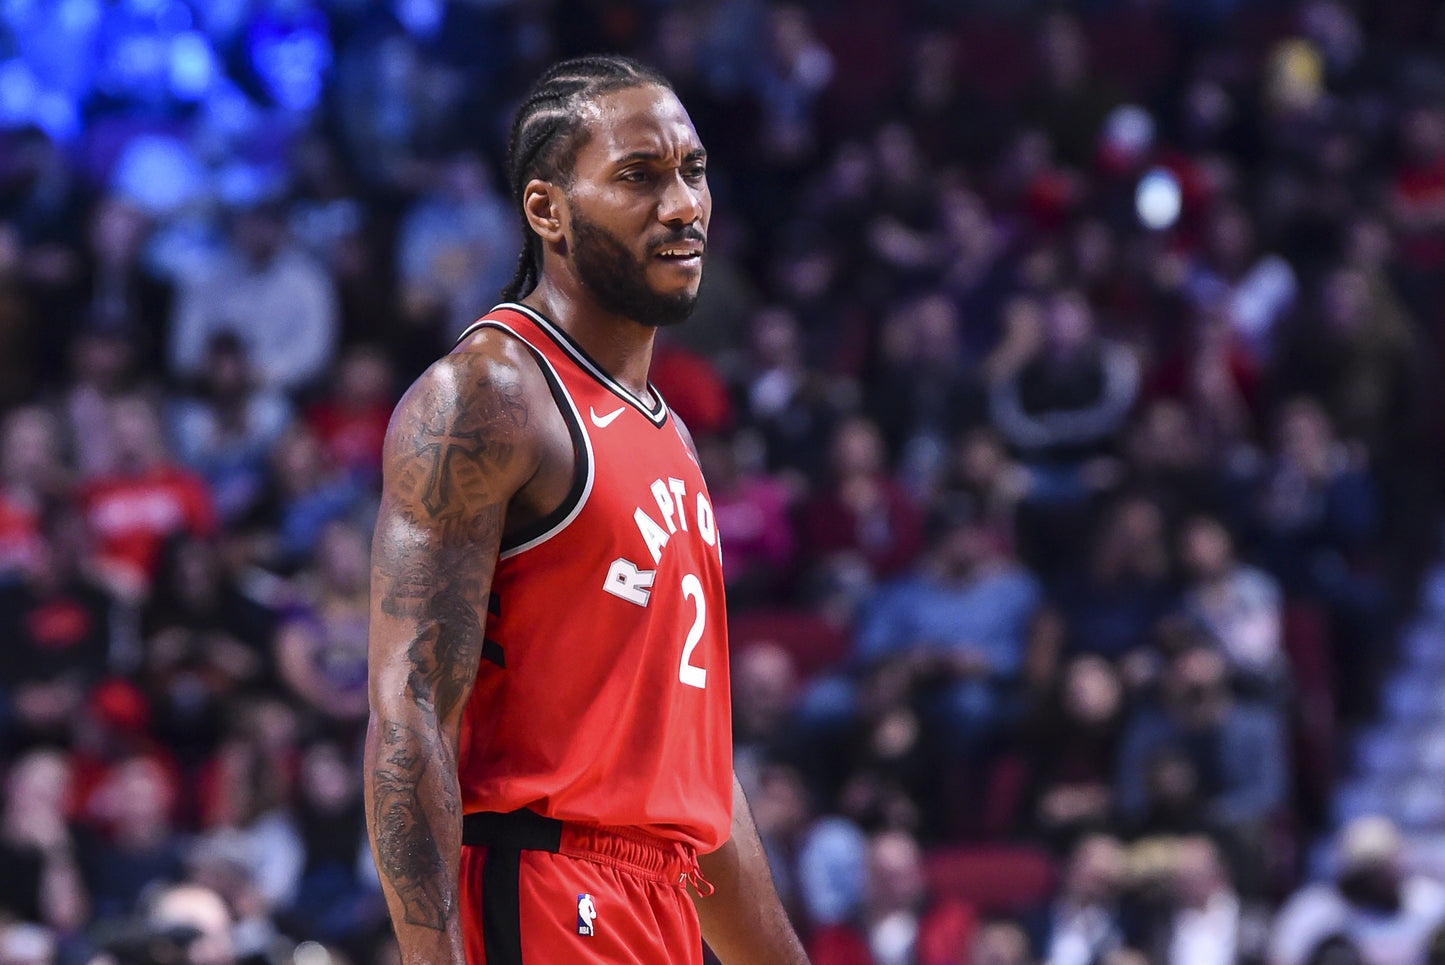 Toronto Raptors Kawhi Leonard 2018 NBA Finals Patch Red Swingman Jersey